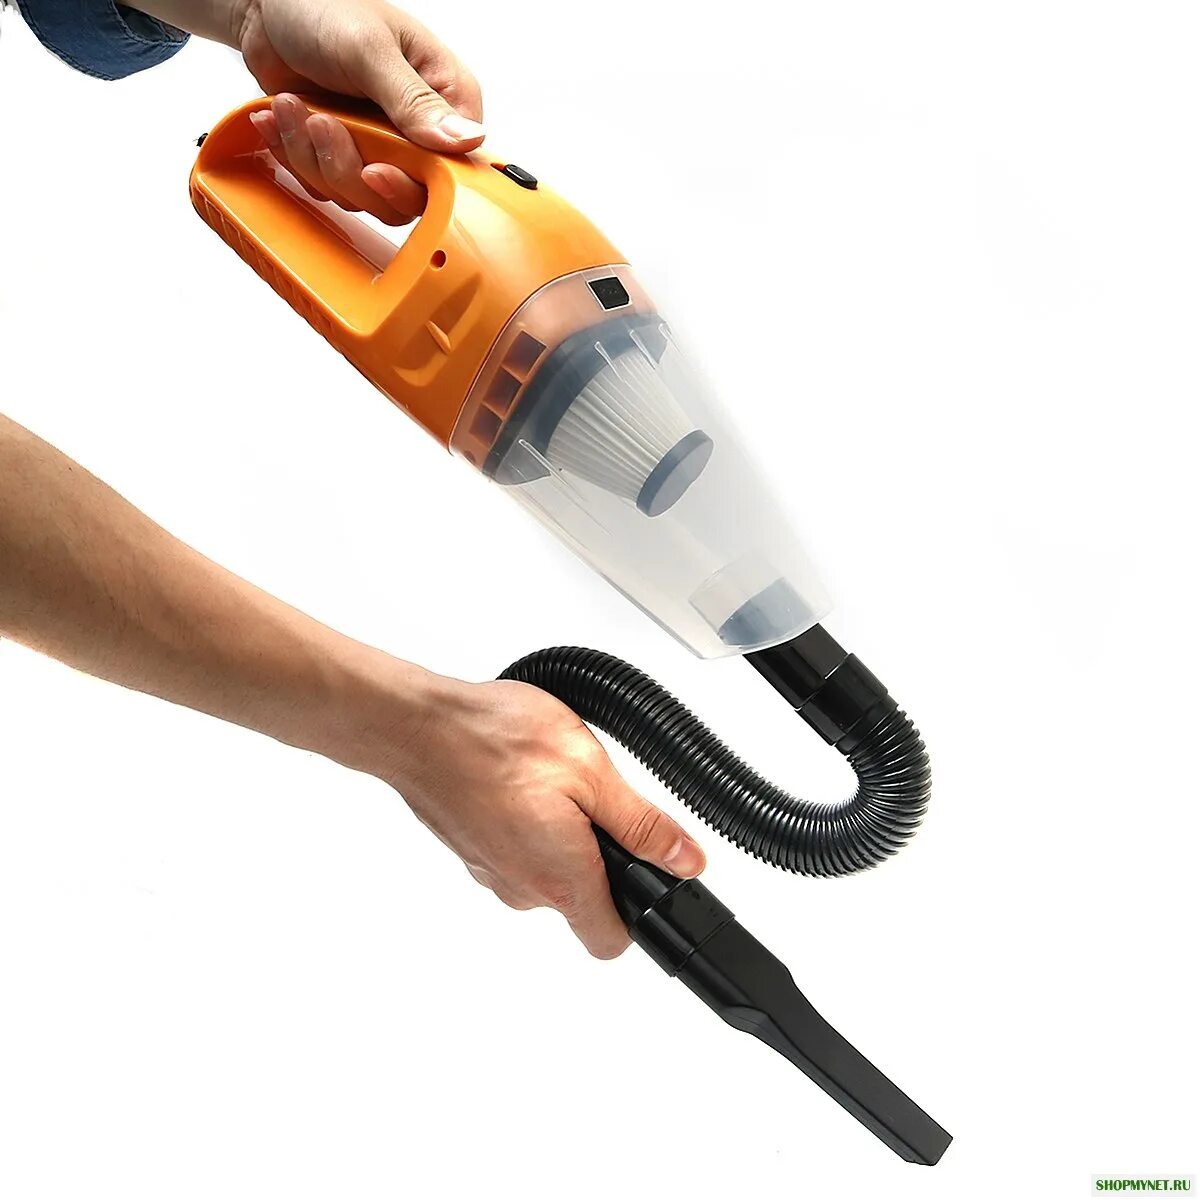 Vacuum Cleaner dc12v wet Dry. Автомобильный пылесос 2in1 Vacuum Cleaner. Vacuum Cleaner автомобильный пылесос USB. Пылесос lydsto Handheld Dry and wet Vaccum Cleaner w1.